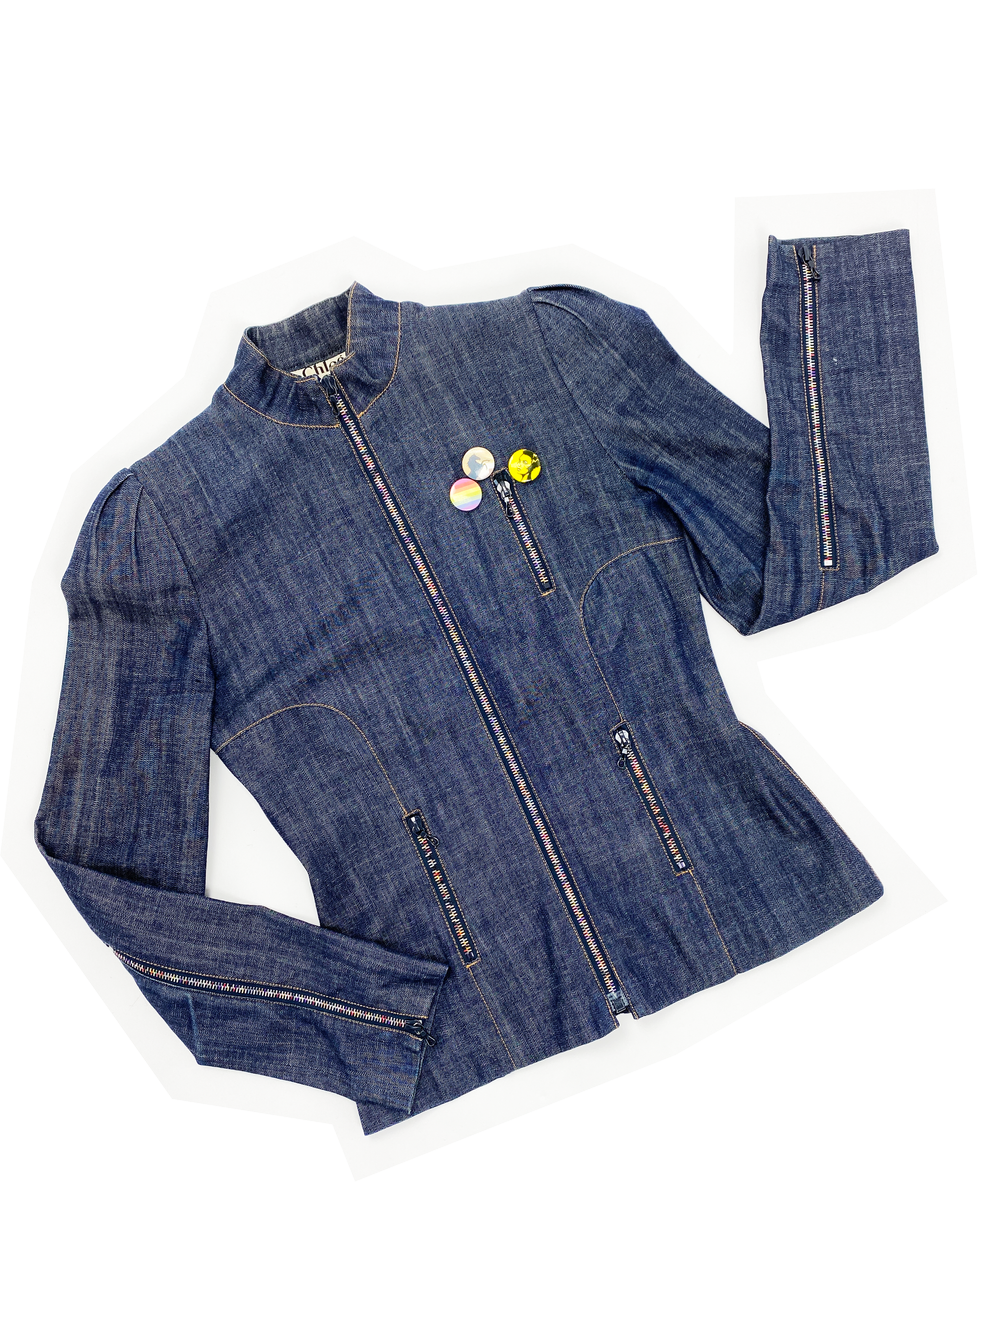 Chloe S/S 2001 rainbow zipper jean jacket — JAMES VELORIA